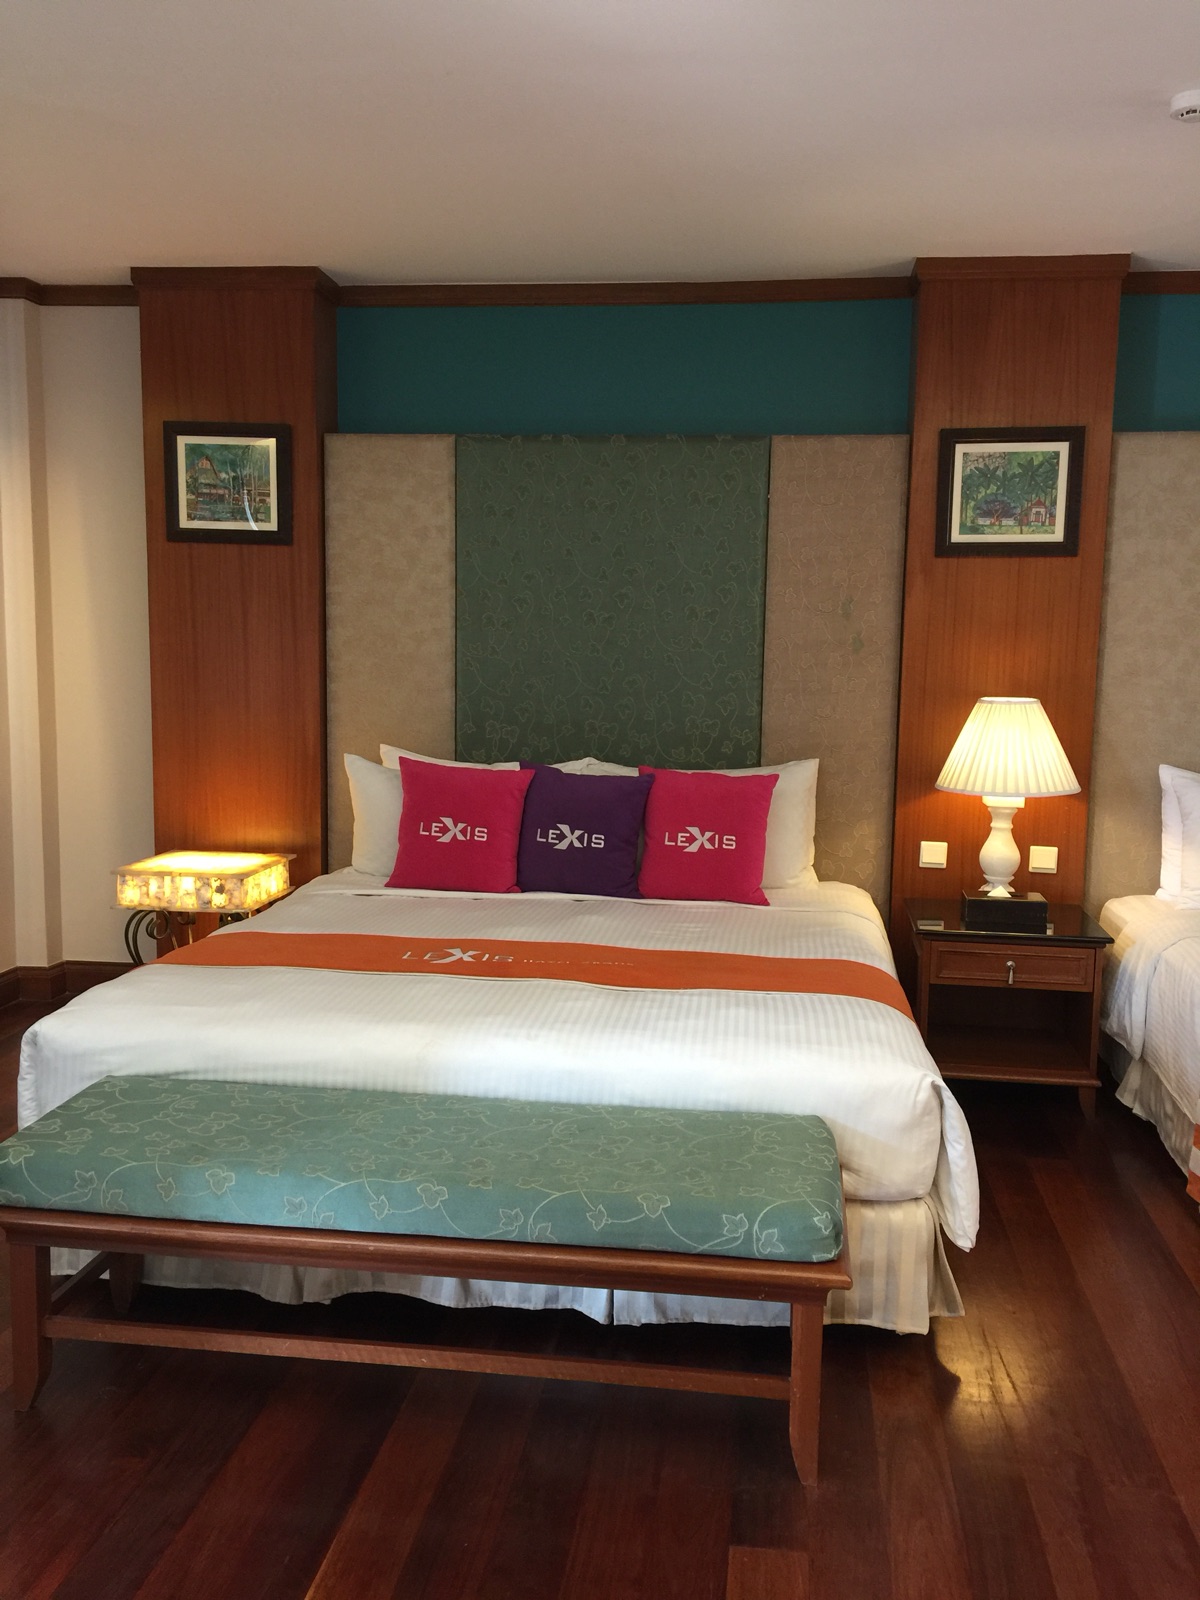 Resort Hotel Bed Sheet & Ruffles For Malaysia & Sing